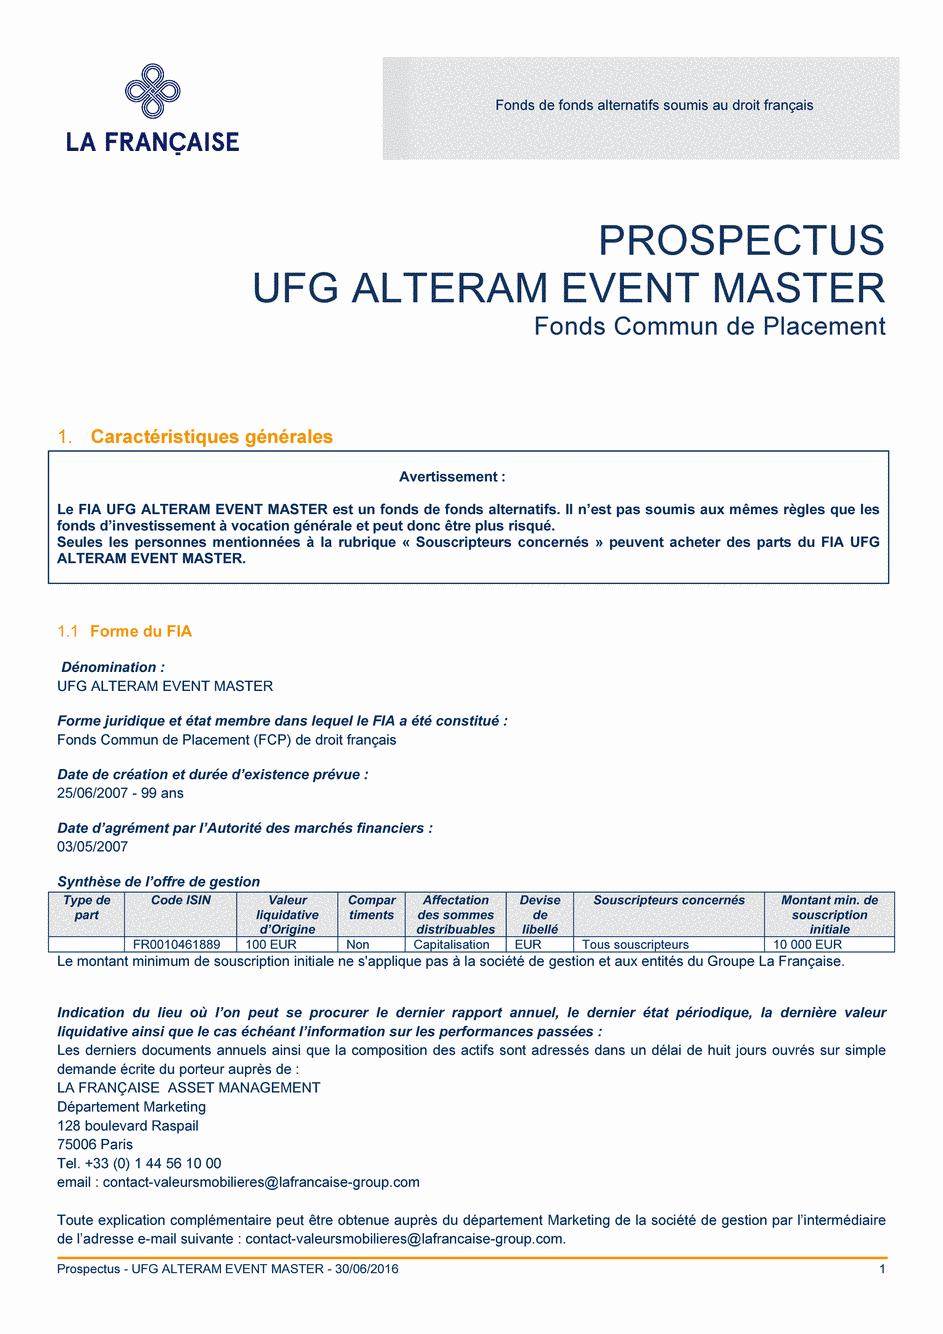 Prospectus UFG ALTERAM Event Master - 30/06/2016 - Français